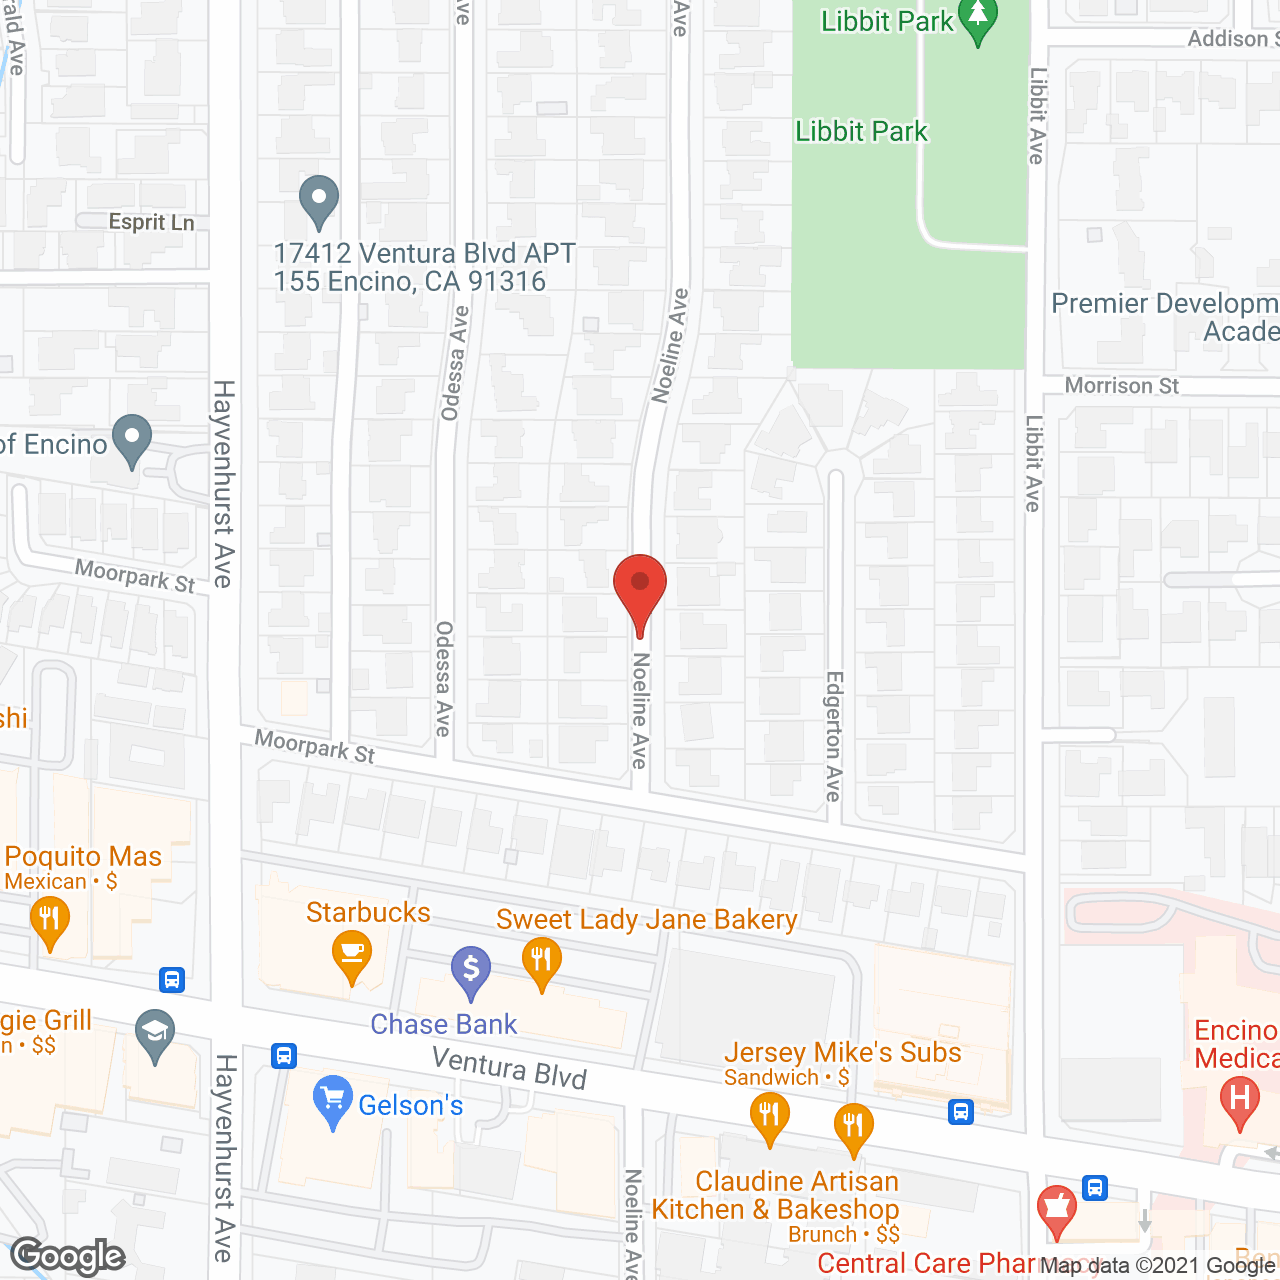 Encino Gardens in google map